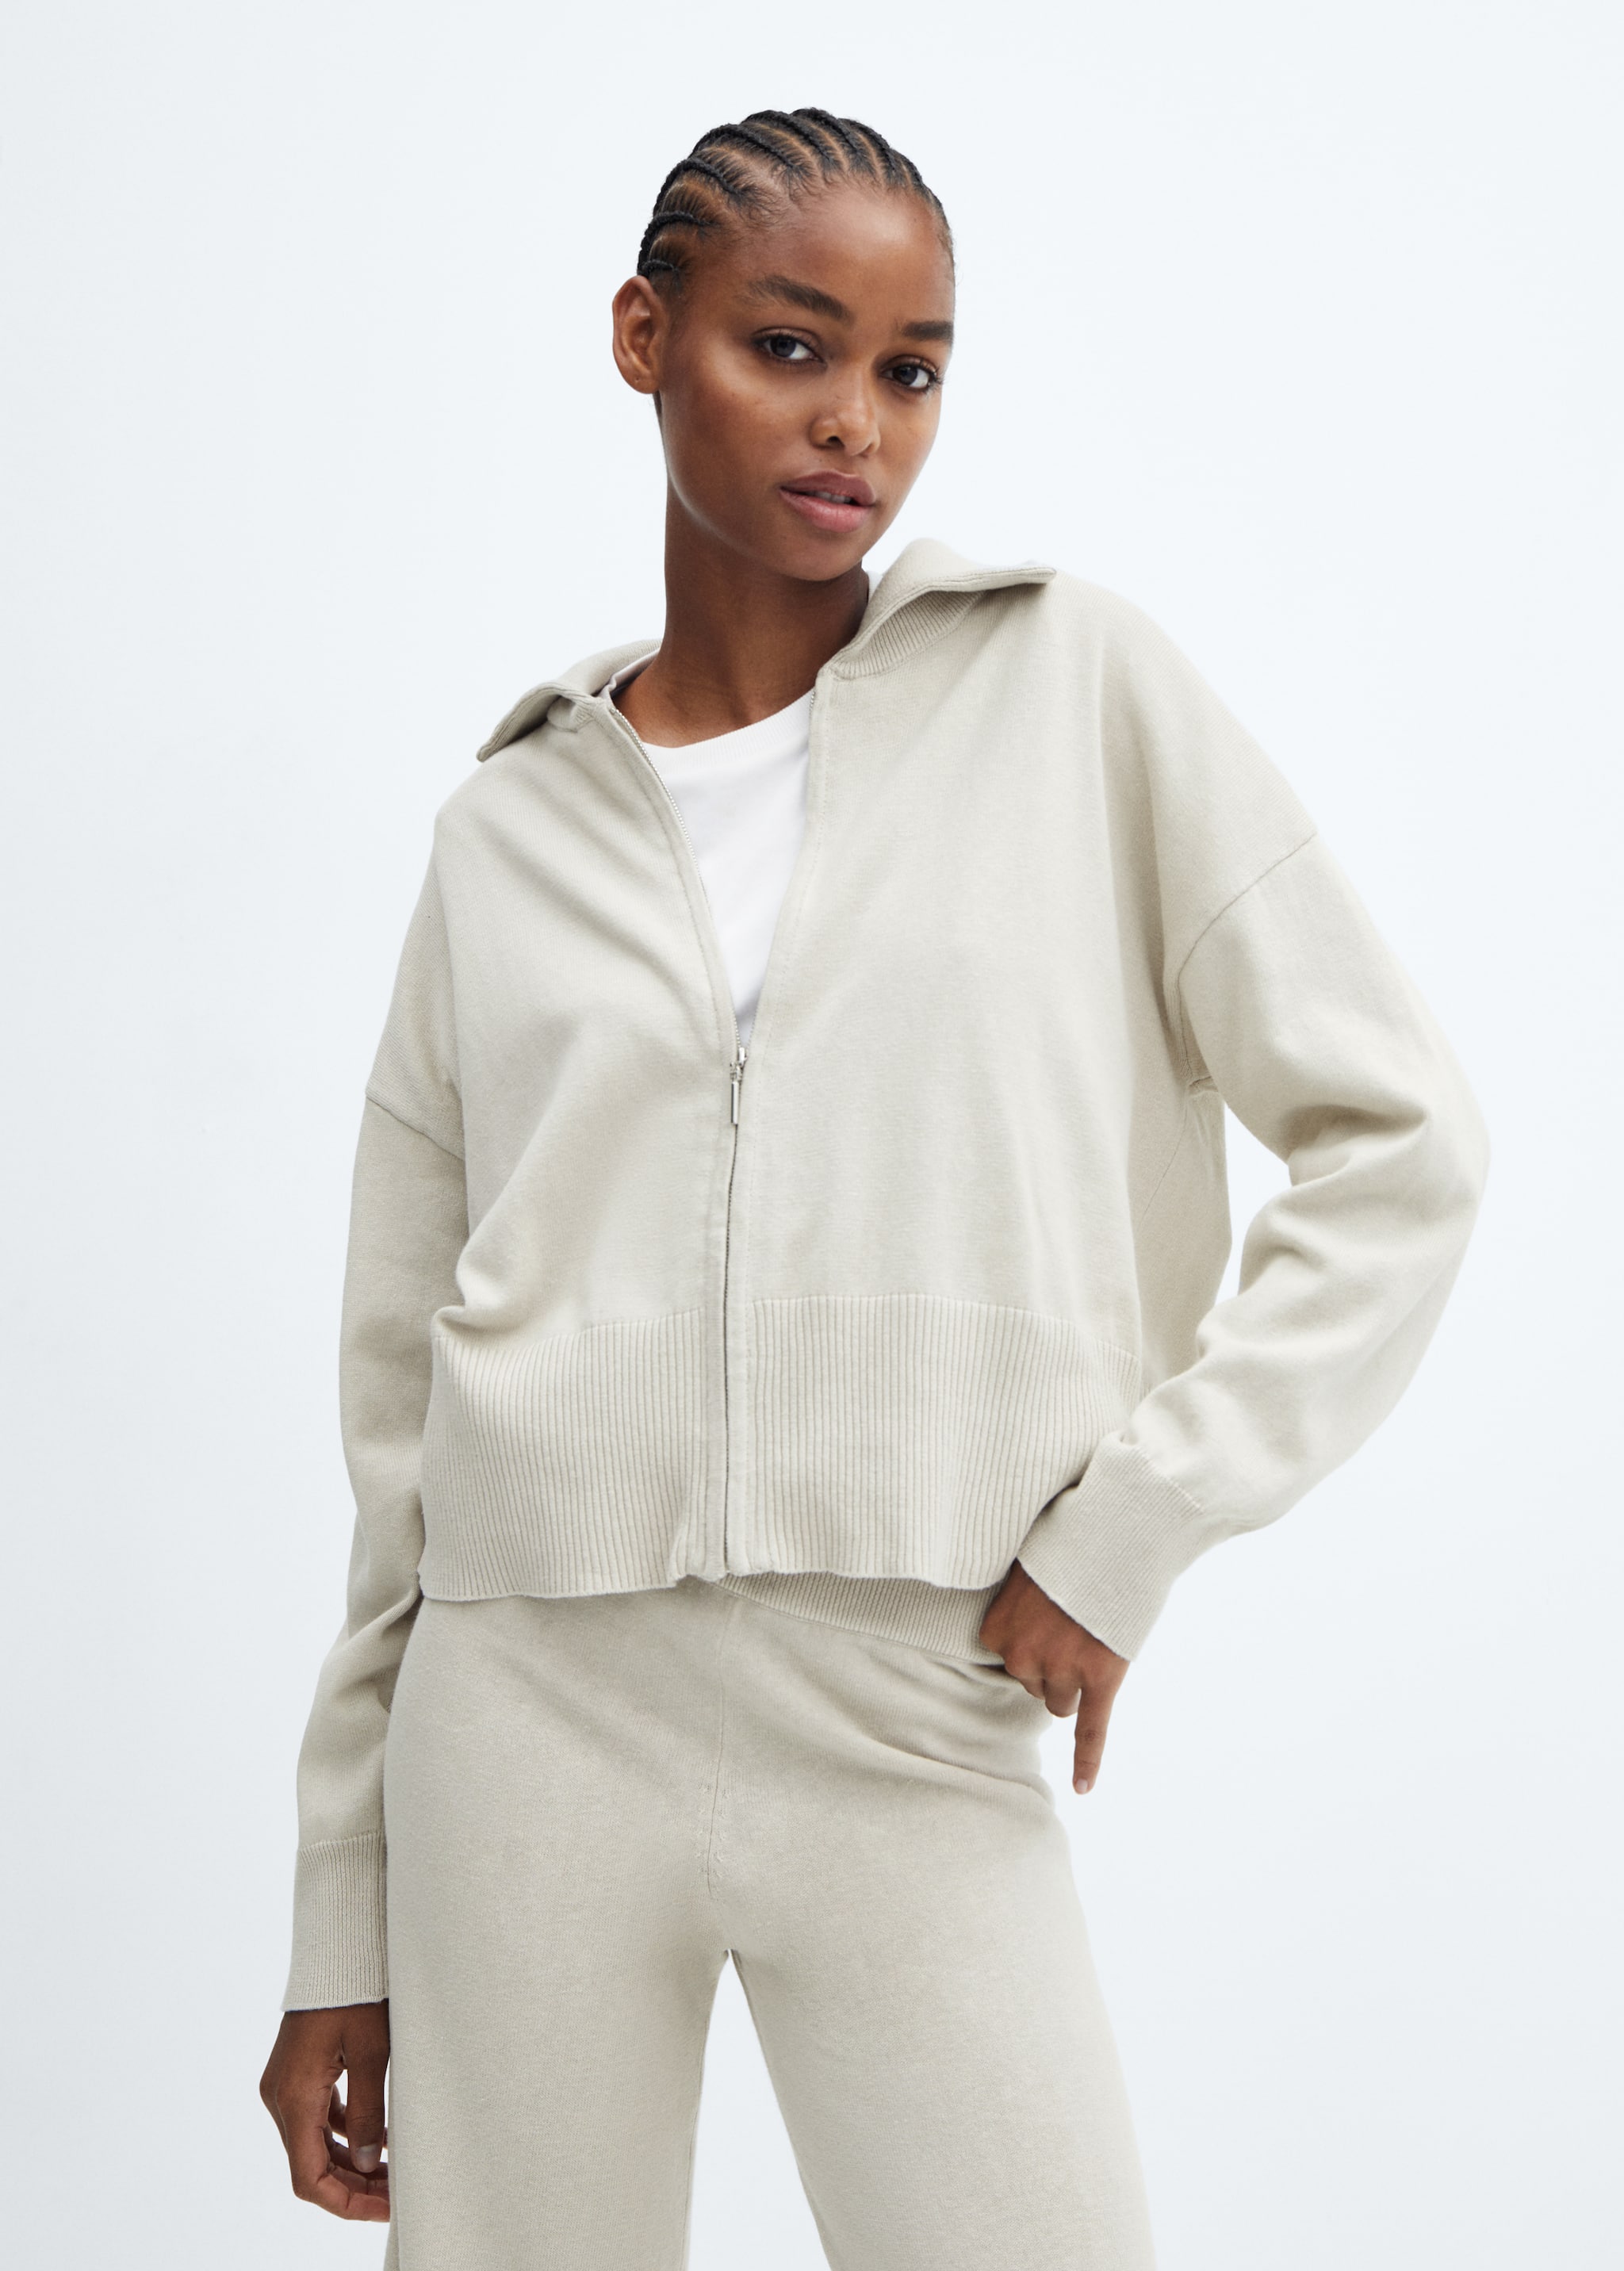 Cotton and linen pyjama jacket with zip - Medium plane